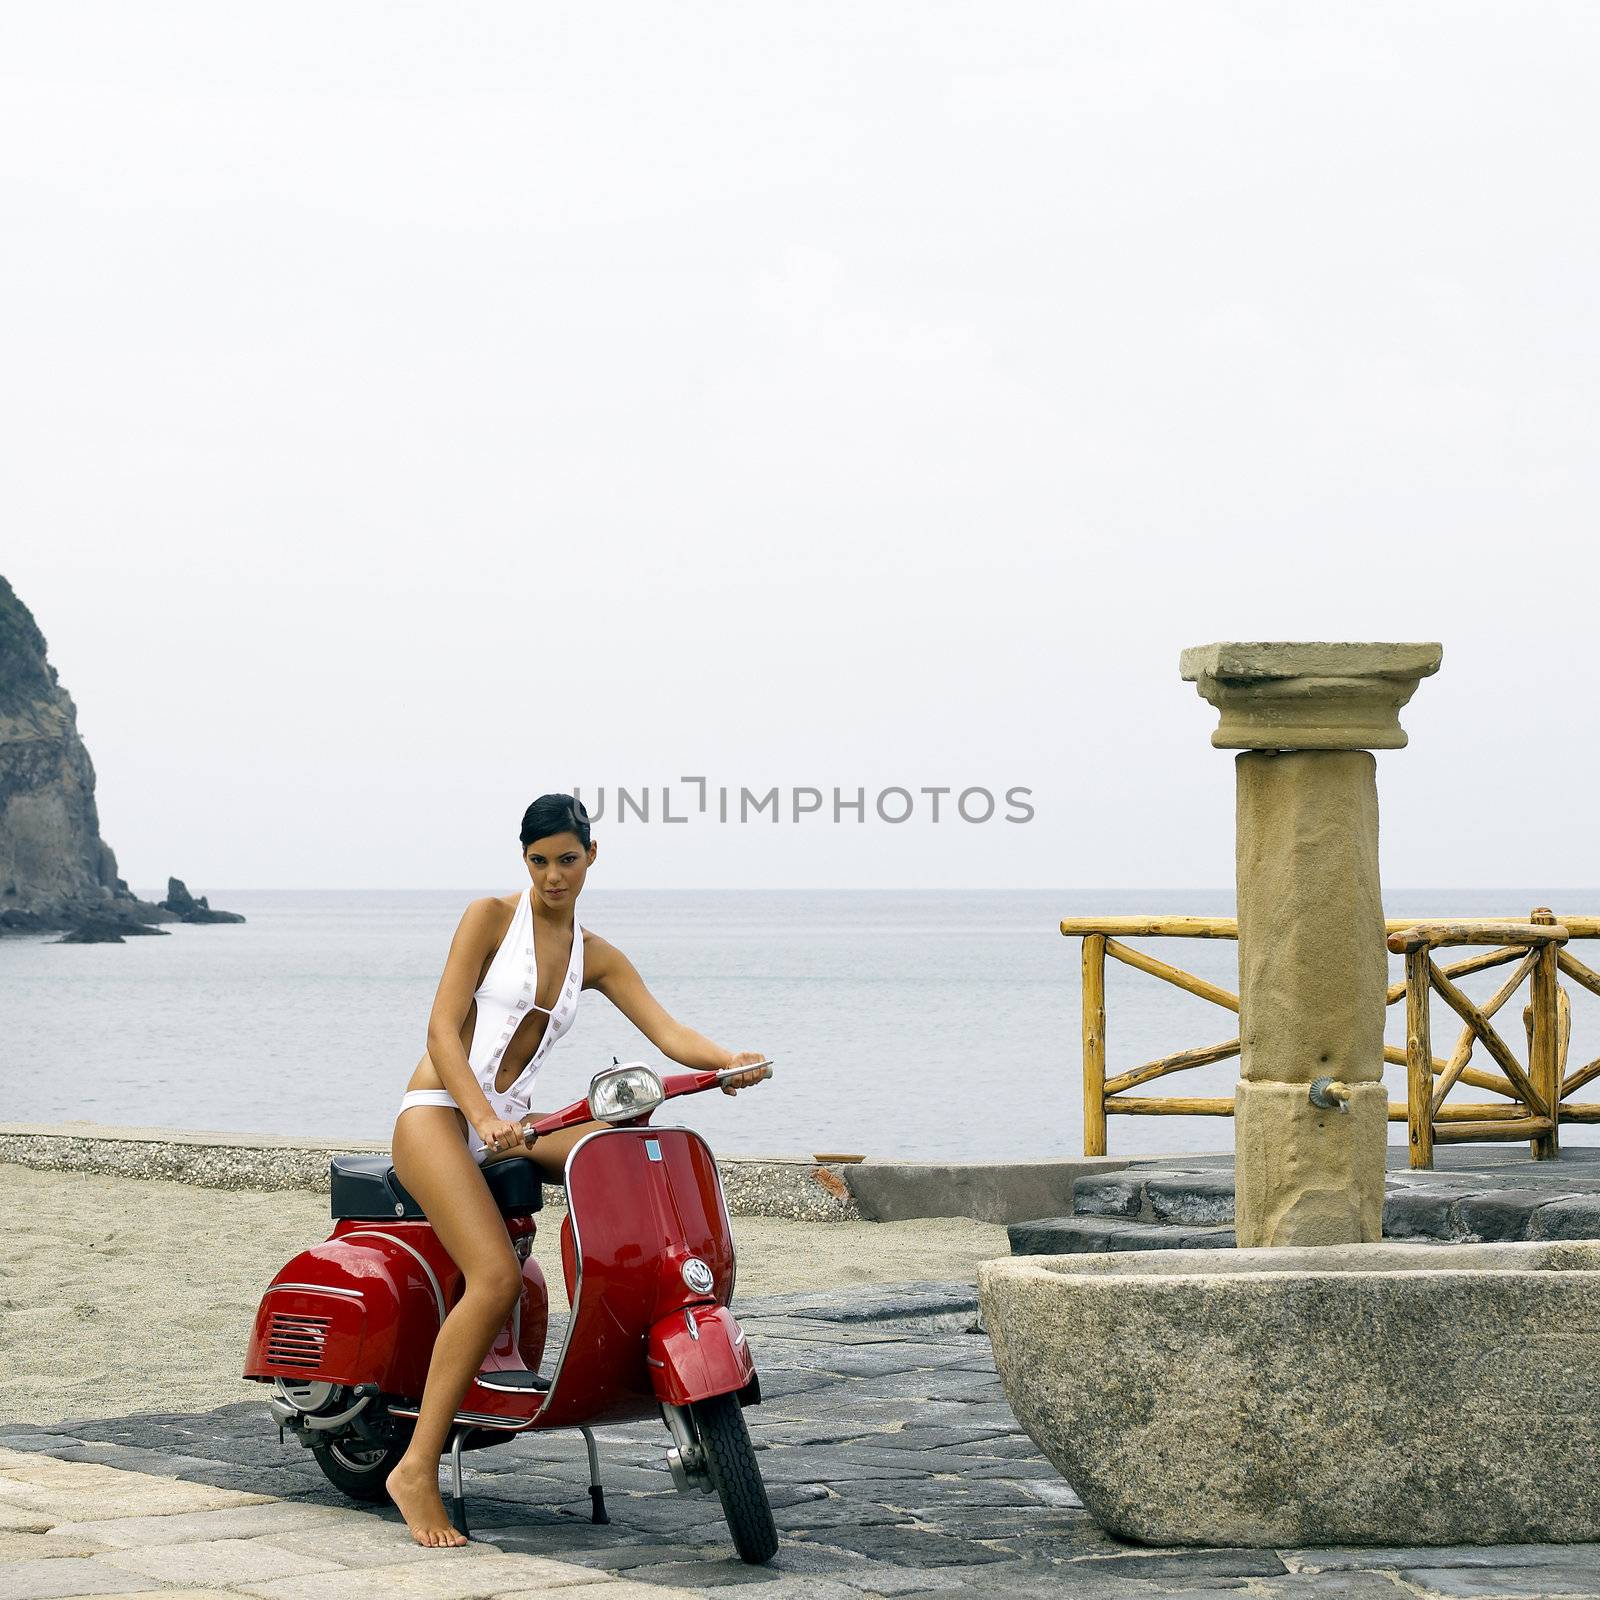 Beautiful woman on a scooter near a beach